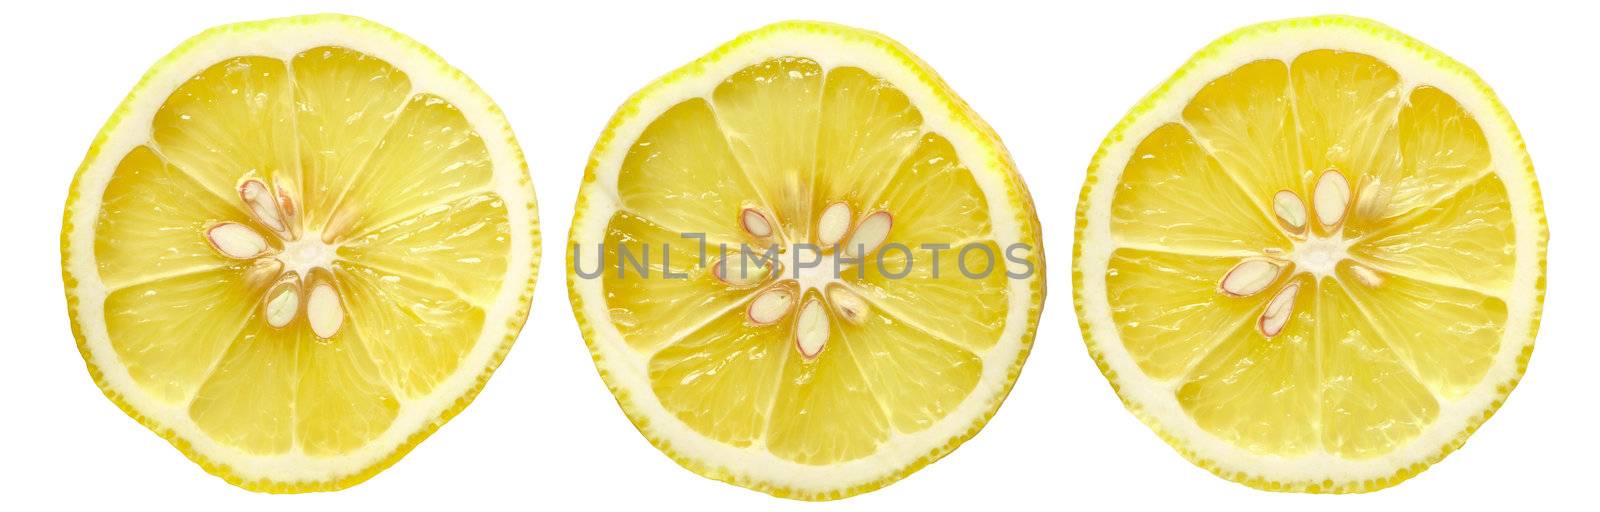 close up of sliced lemons